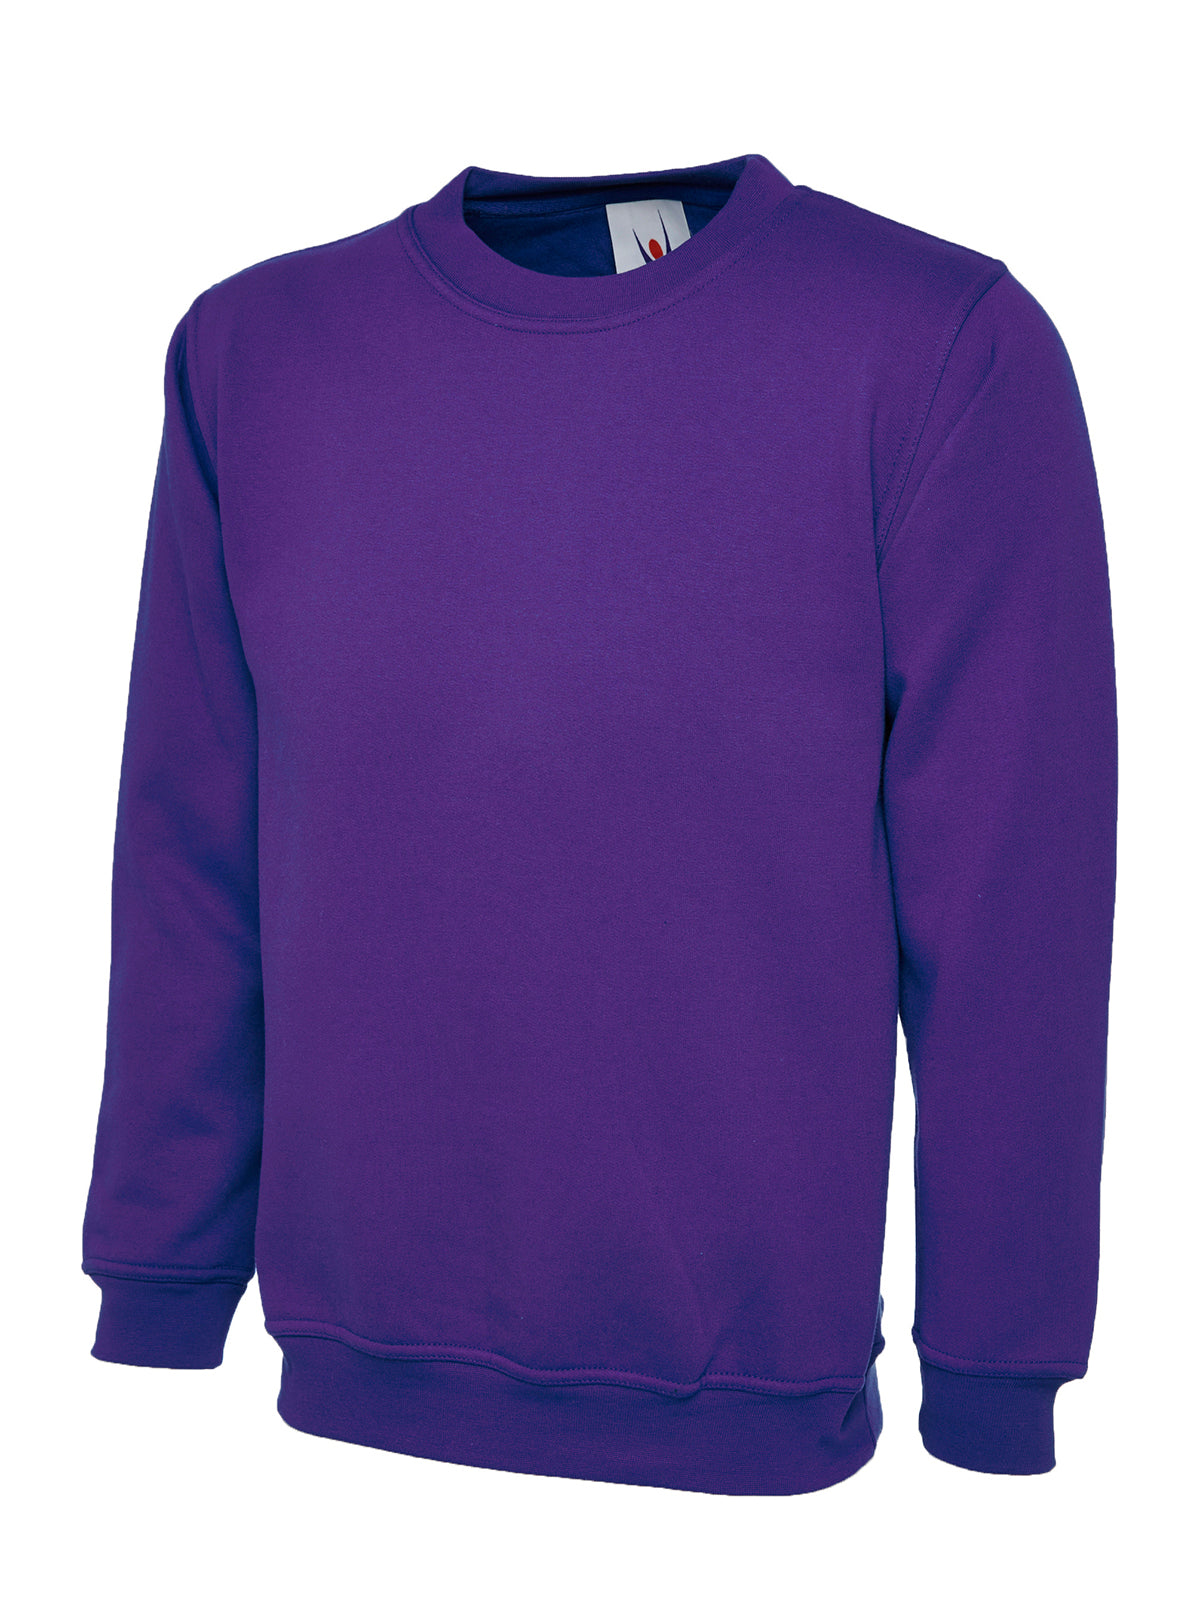 childrens_sweatshirt_purple